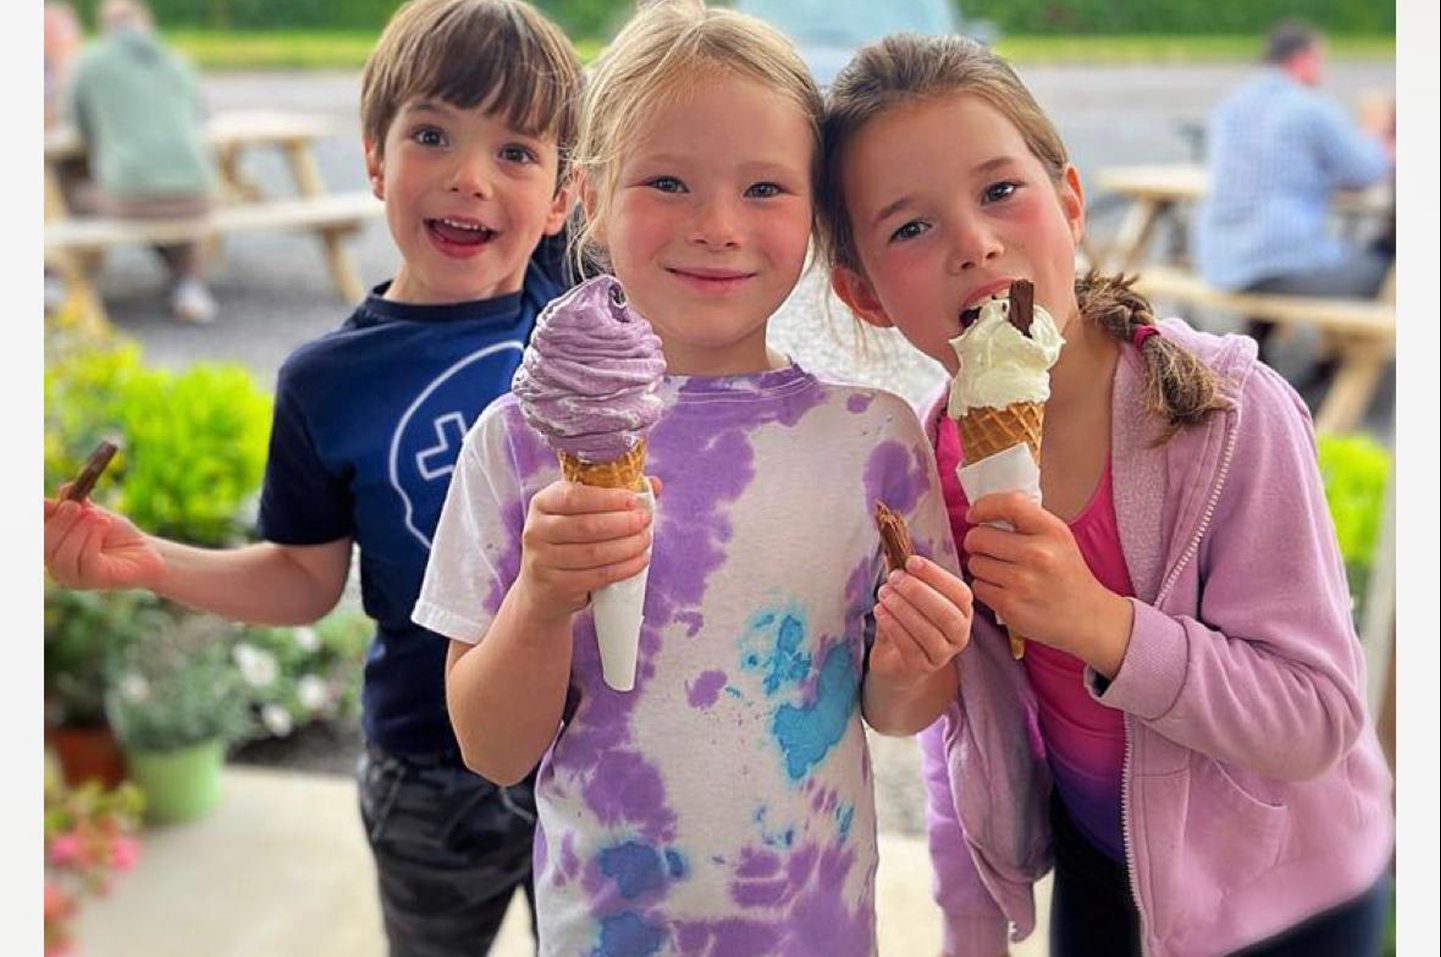 Kids enjoy ice creams